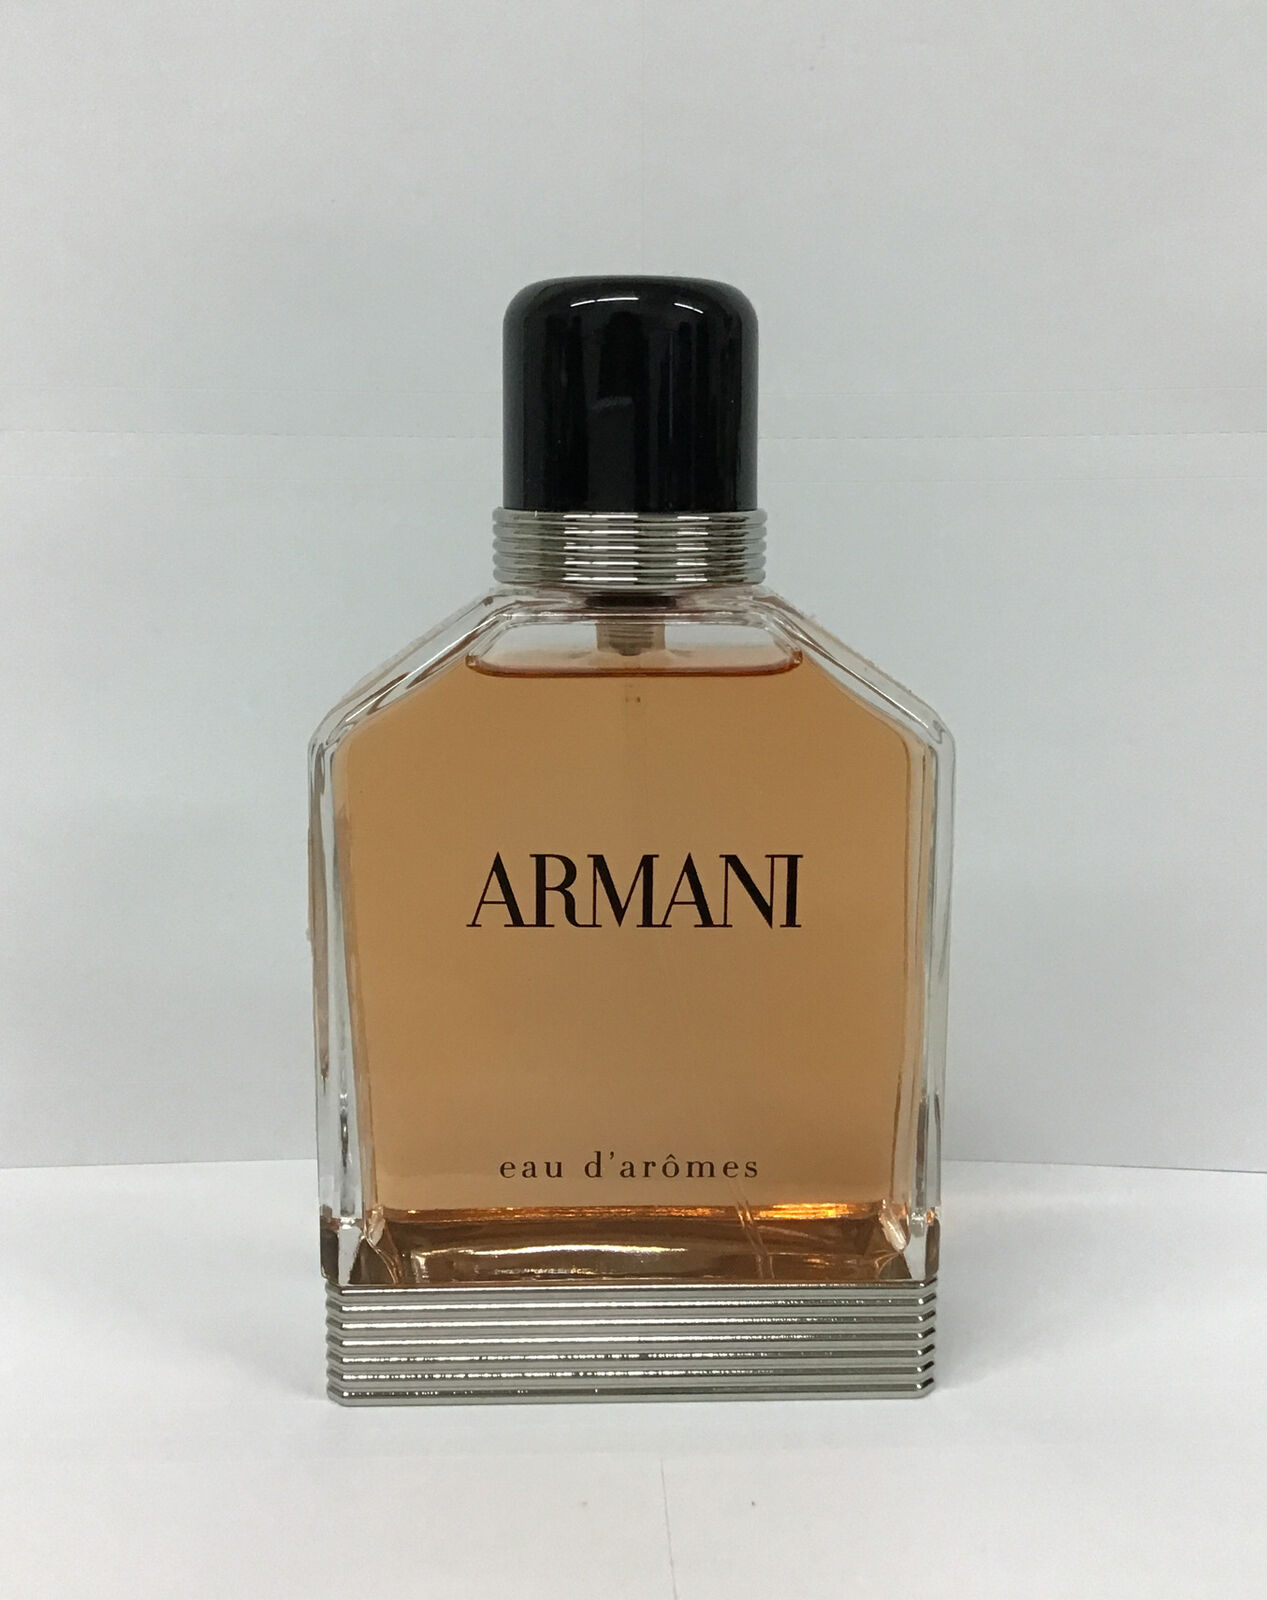 Armani Eau D’arômes By Giorgio Armani EDT Spray 3.4 Fl Oz, As Pictured 